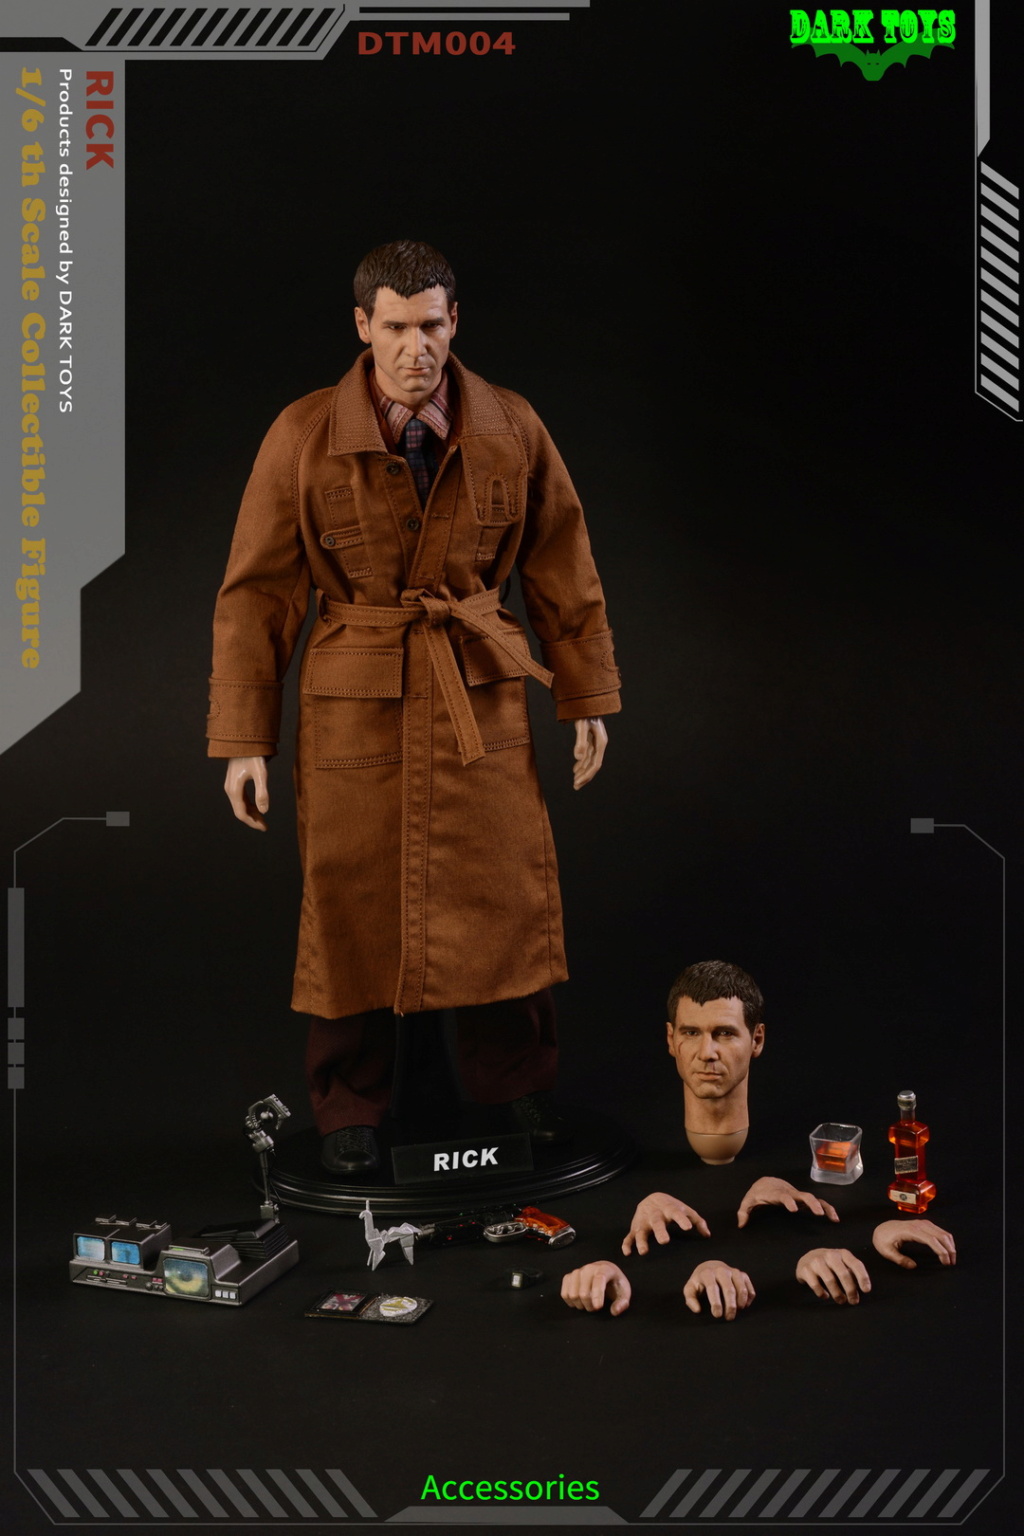 NEW PRODUCT: Dark Toys: 1/6 Blade Runner Rick Luxury Set Action Figure #DTM004 10315